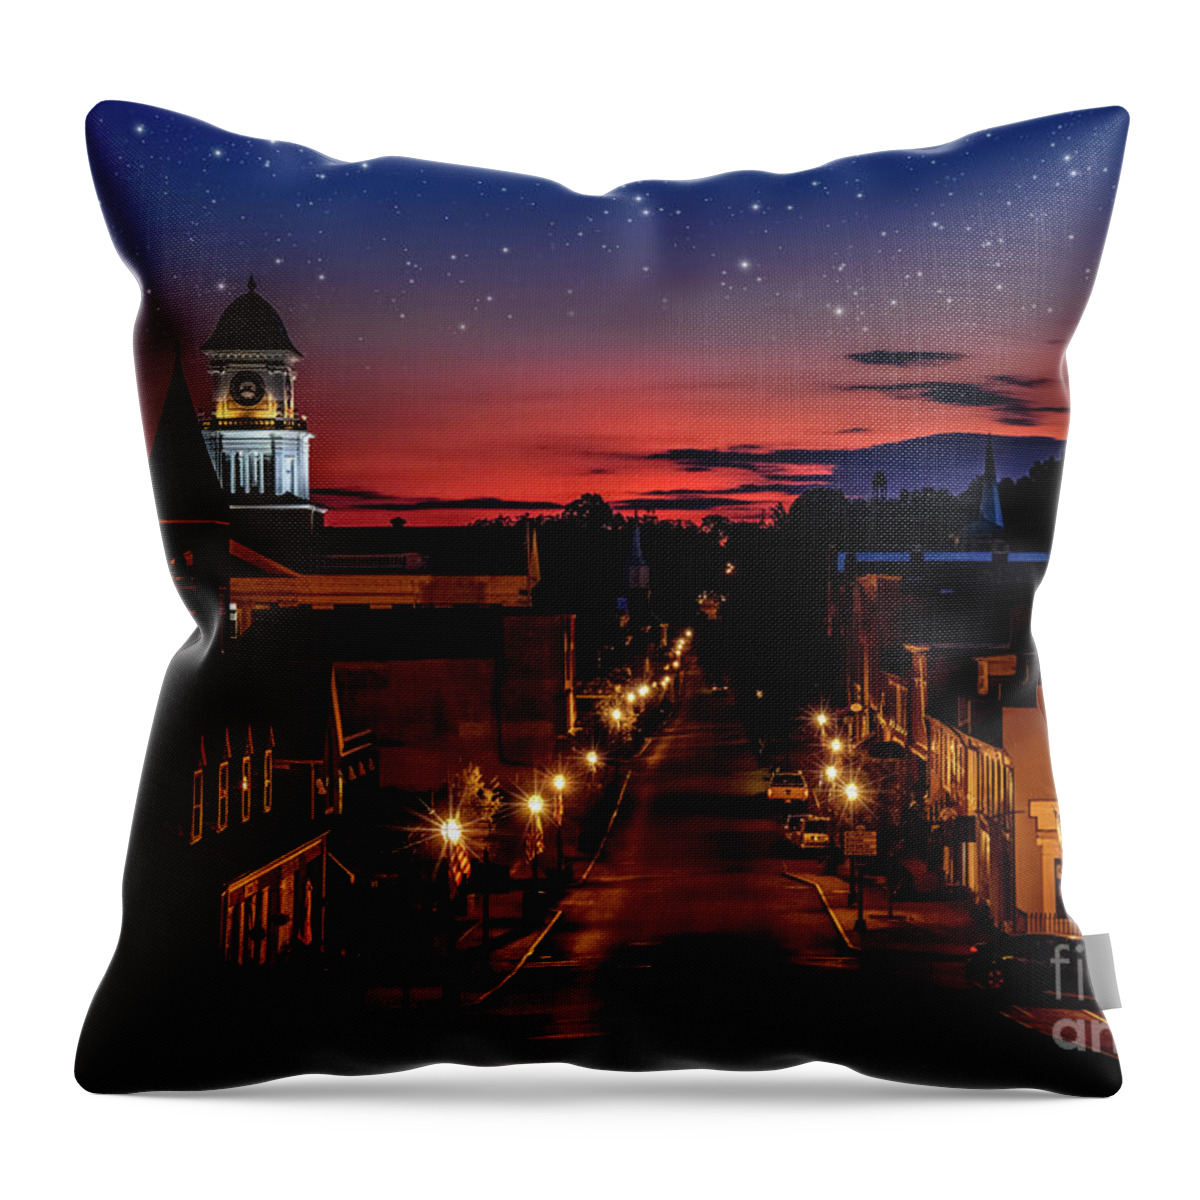 Jonesboro; Jonesborough; Tennessee; Northeast Tennessee; City Throw Pillow featuring the photograph Sleepy little town of Jonesborough by Shelia Hunt